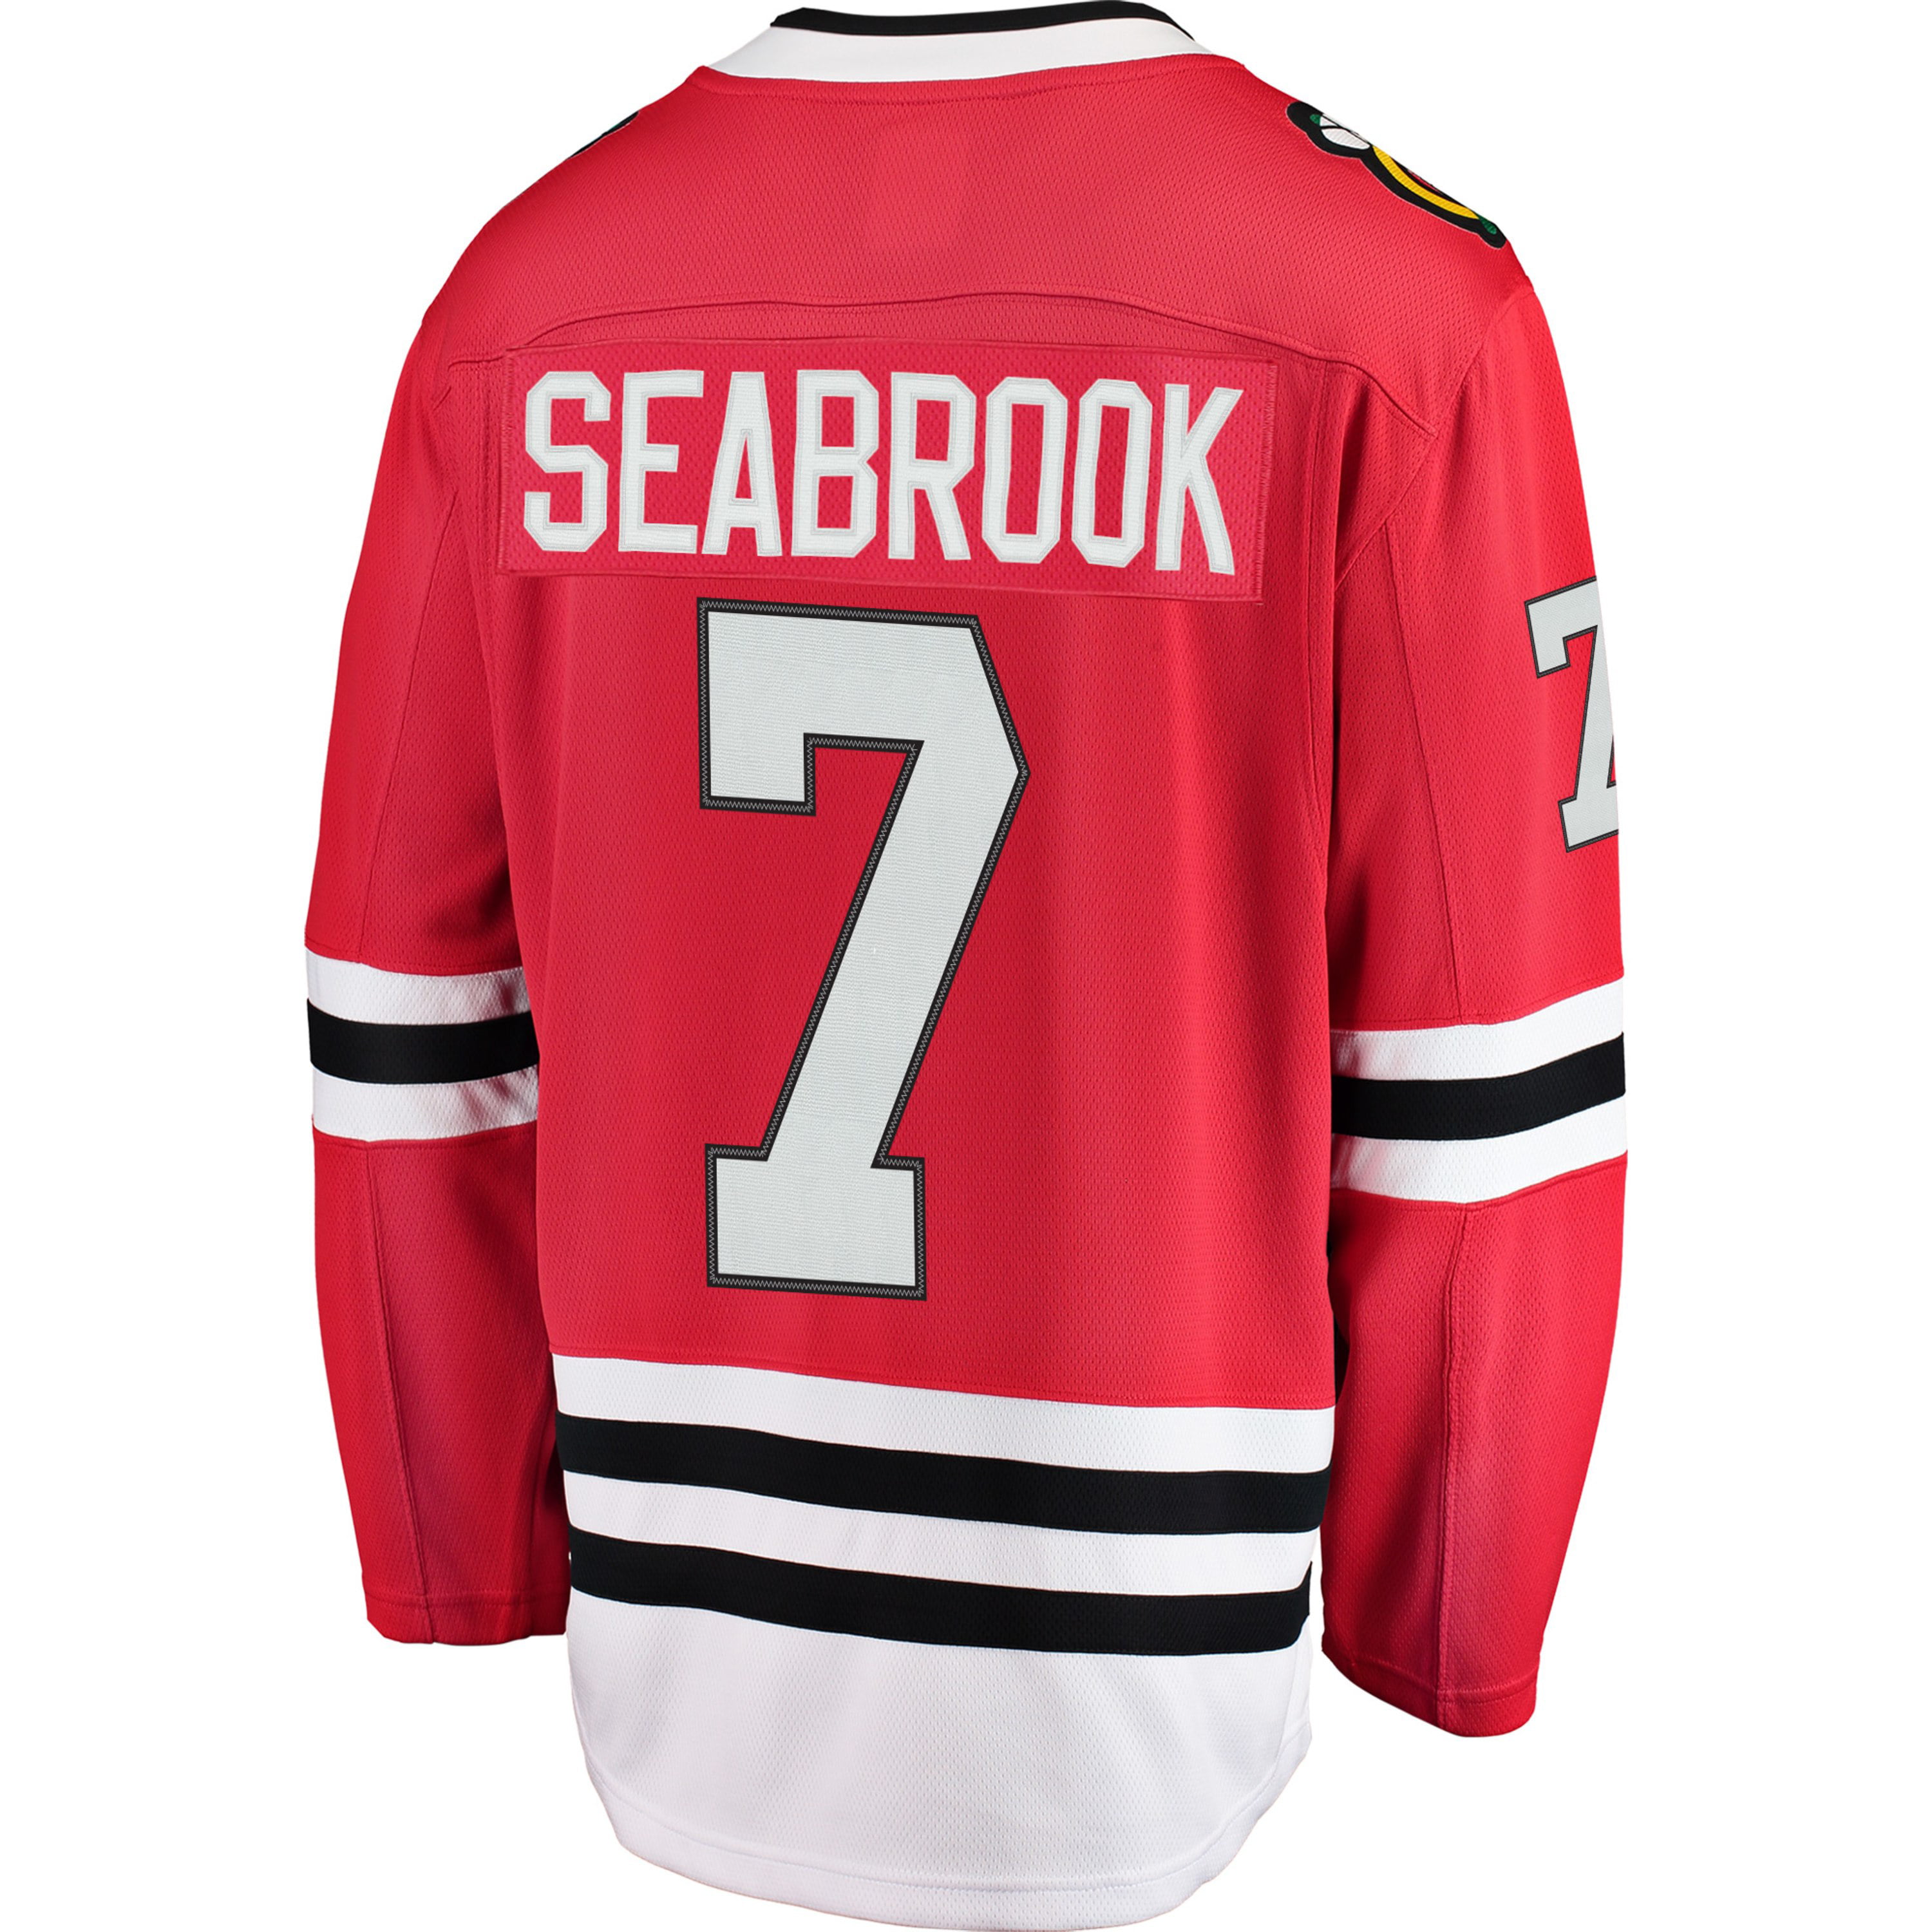 seabrook jersey